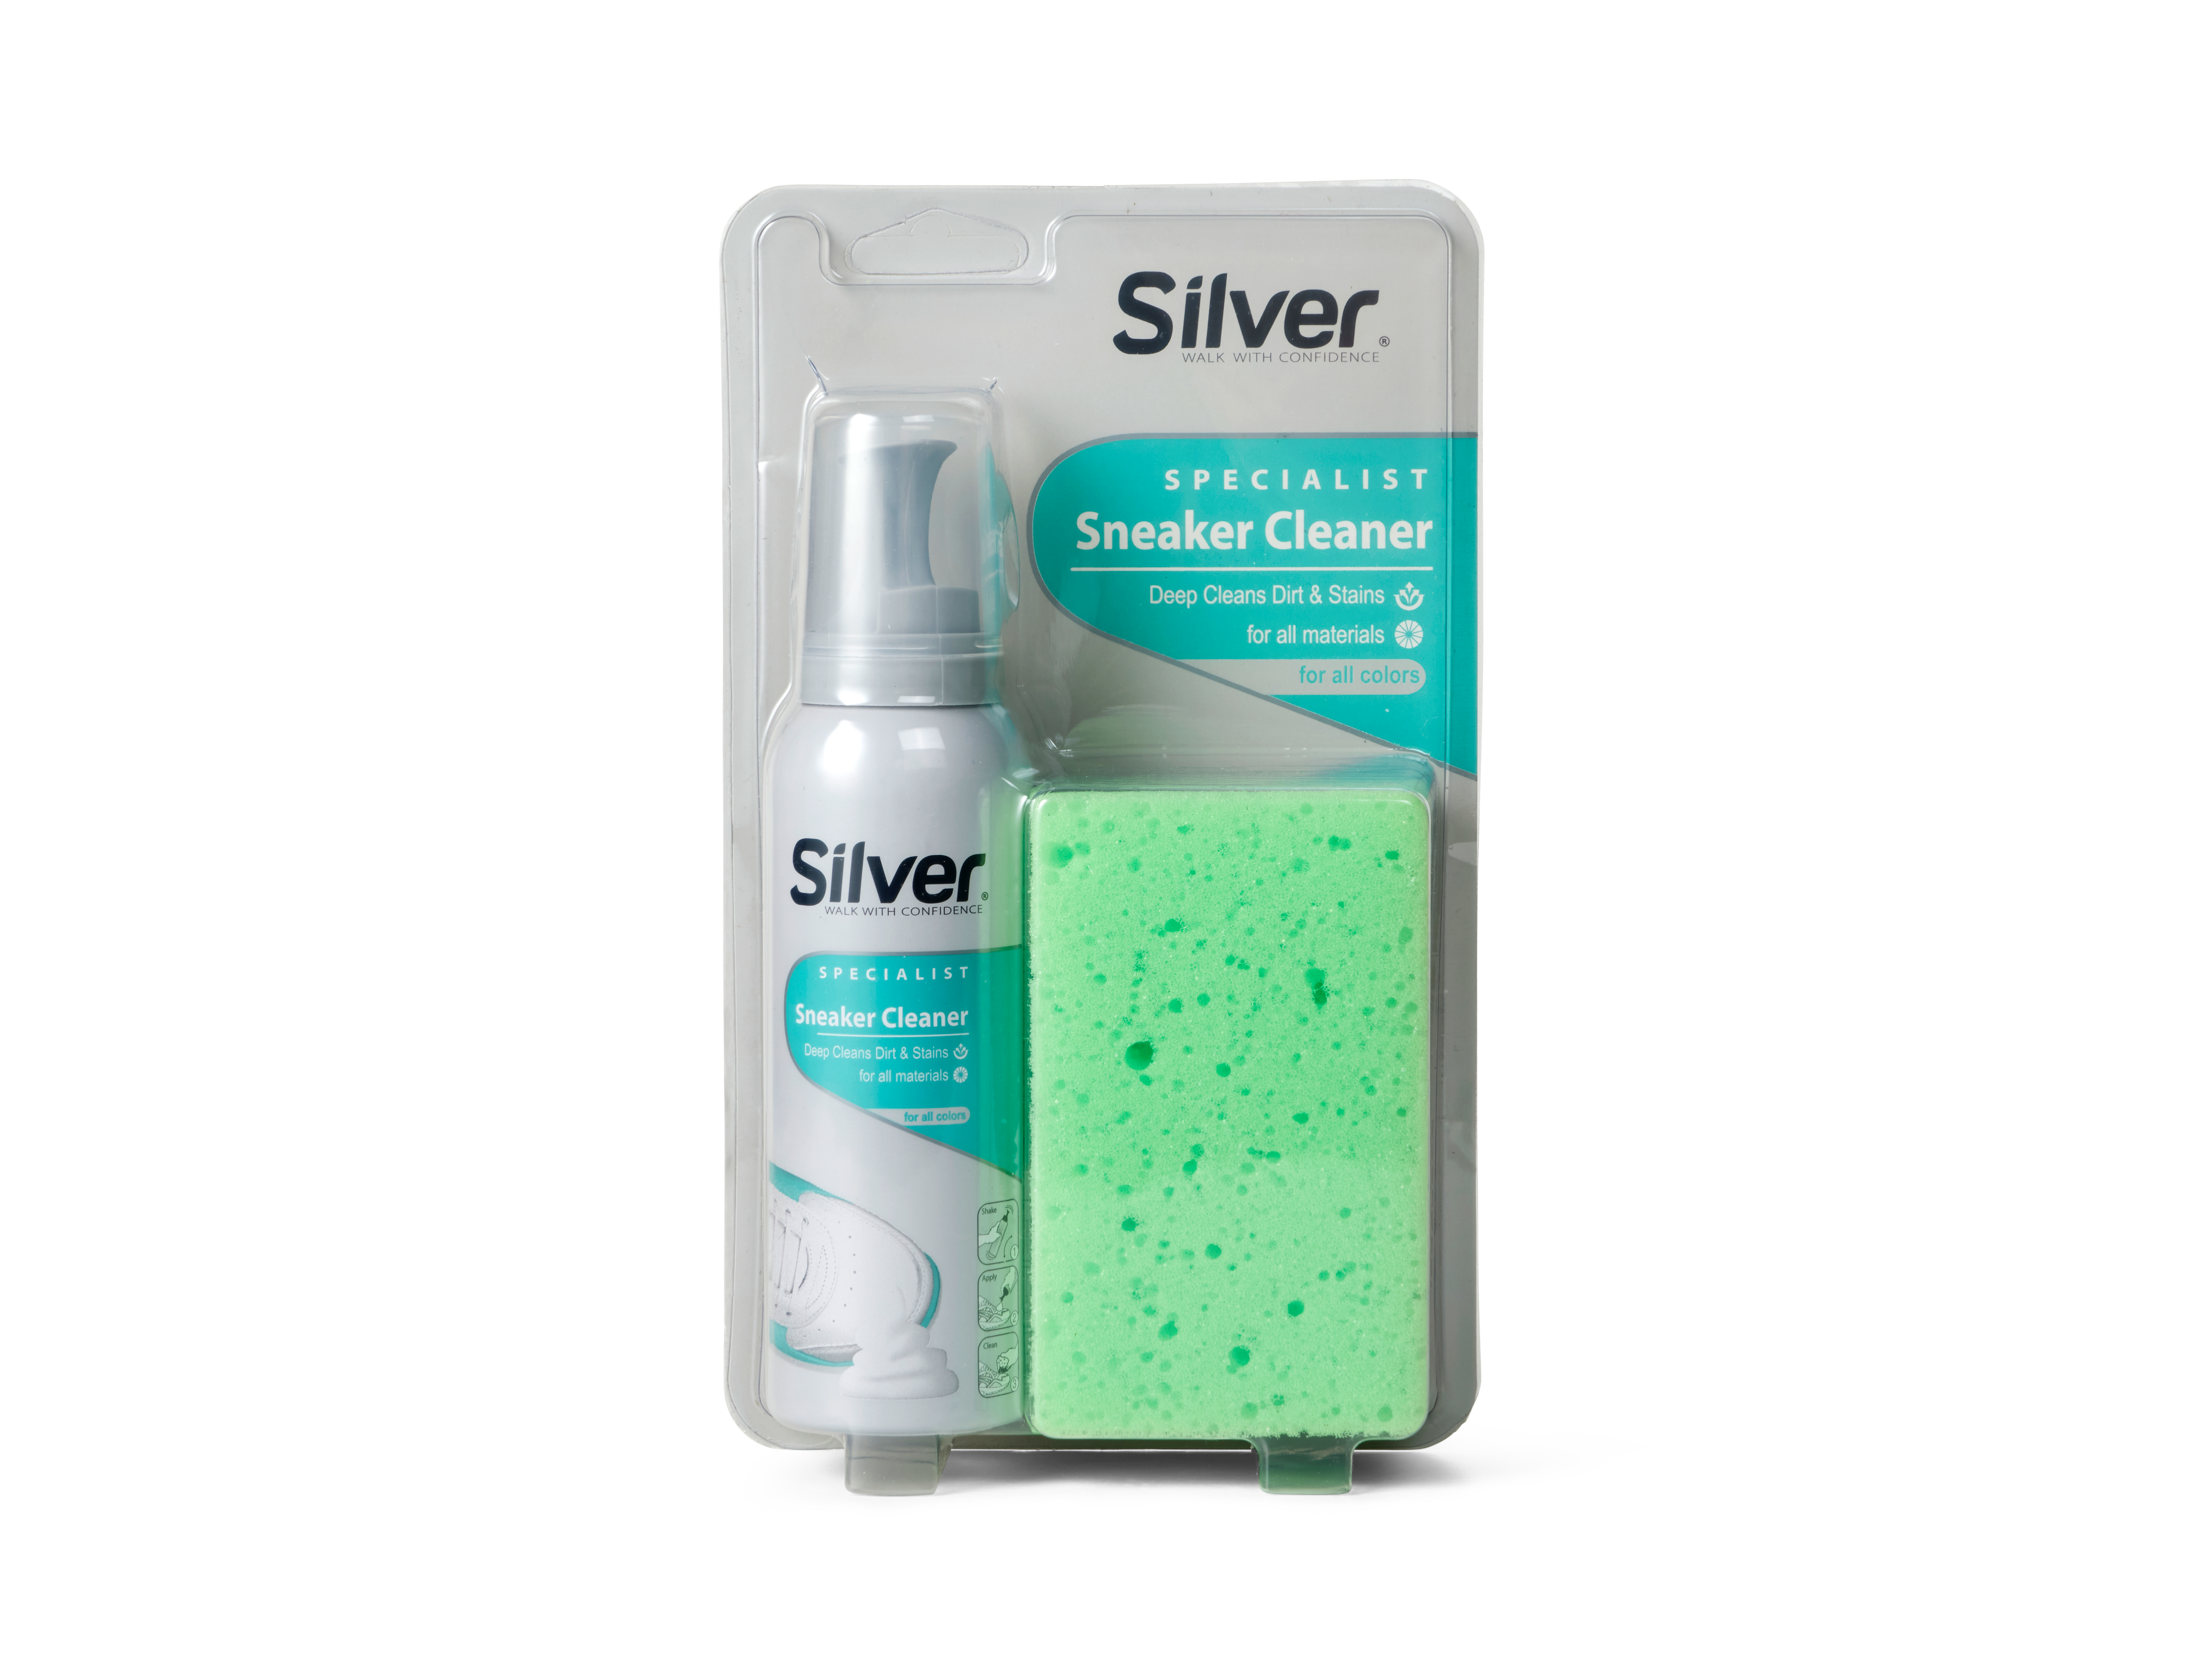 Silver specialist sneaker cleaner, 125 ml